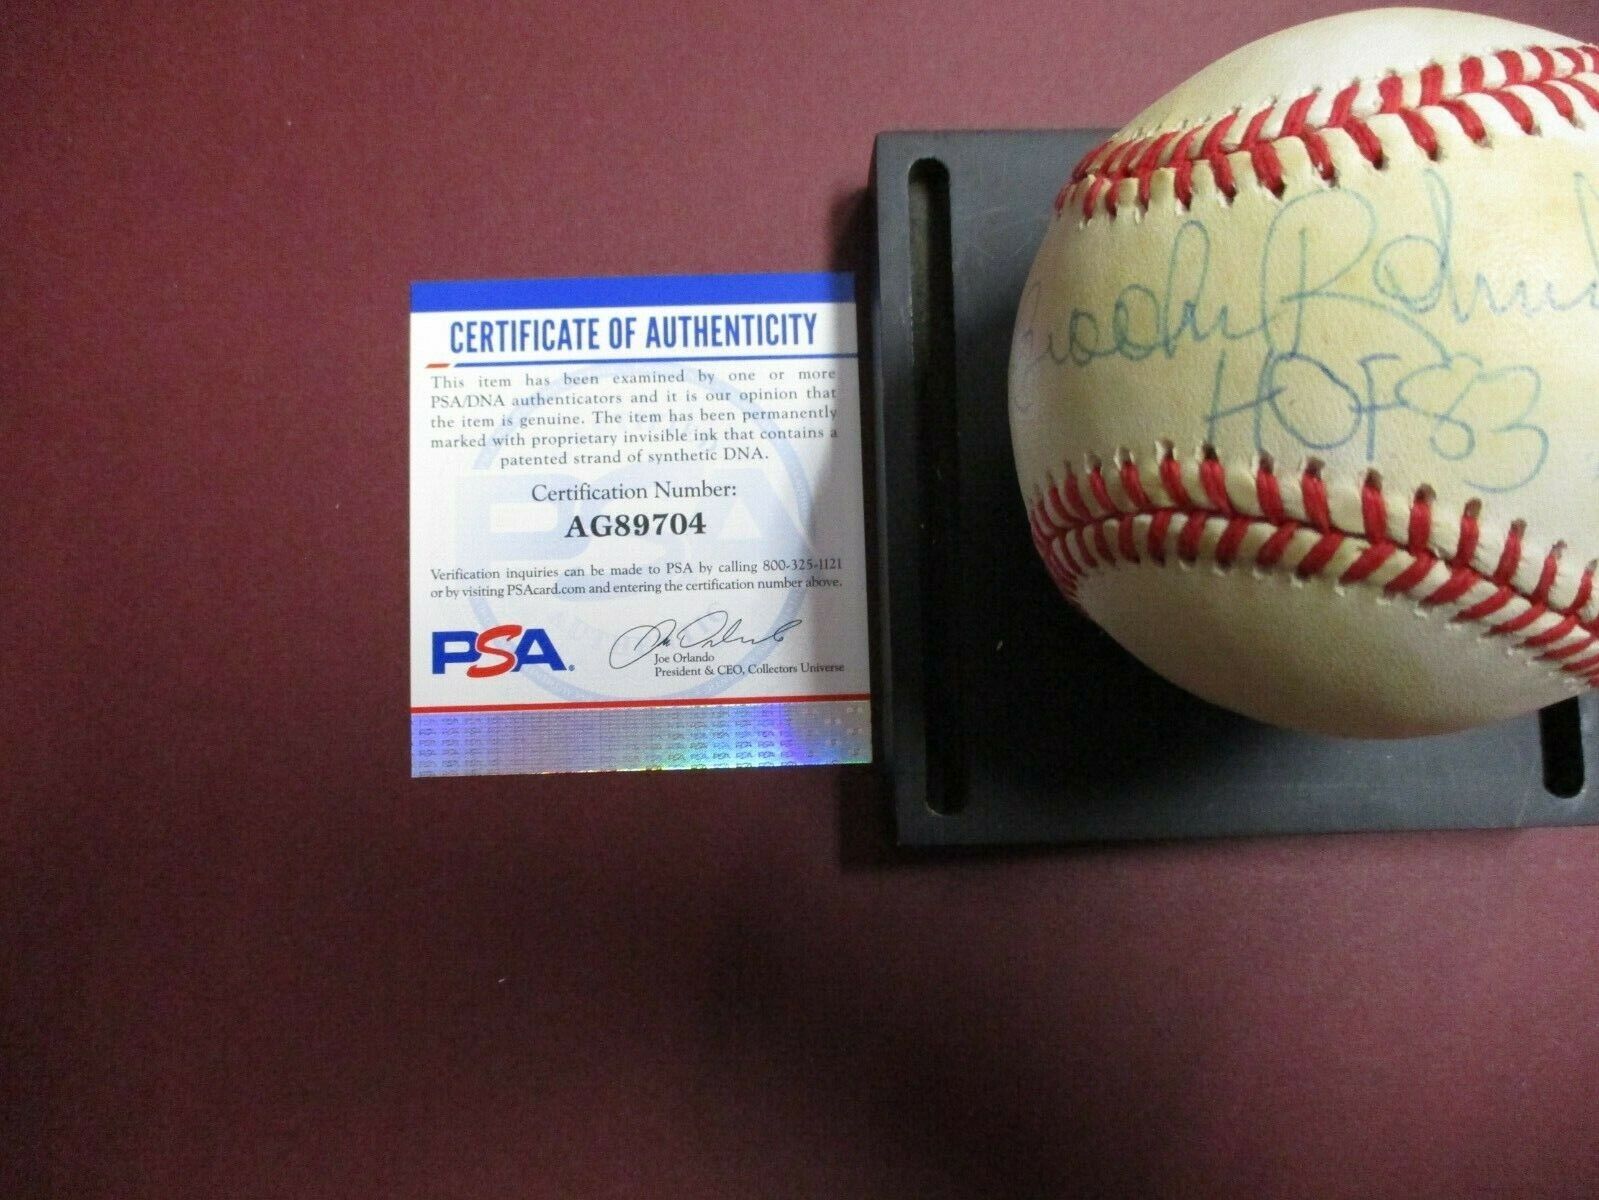 Brooks Robinson - Autographed Signed Baseball